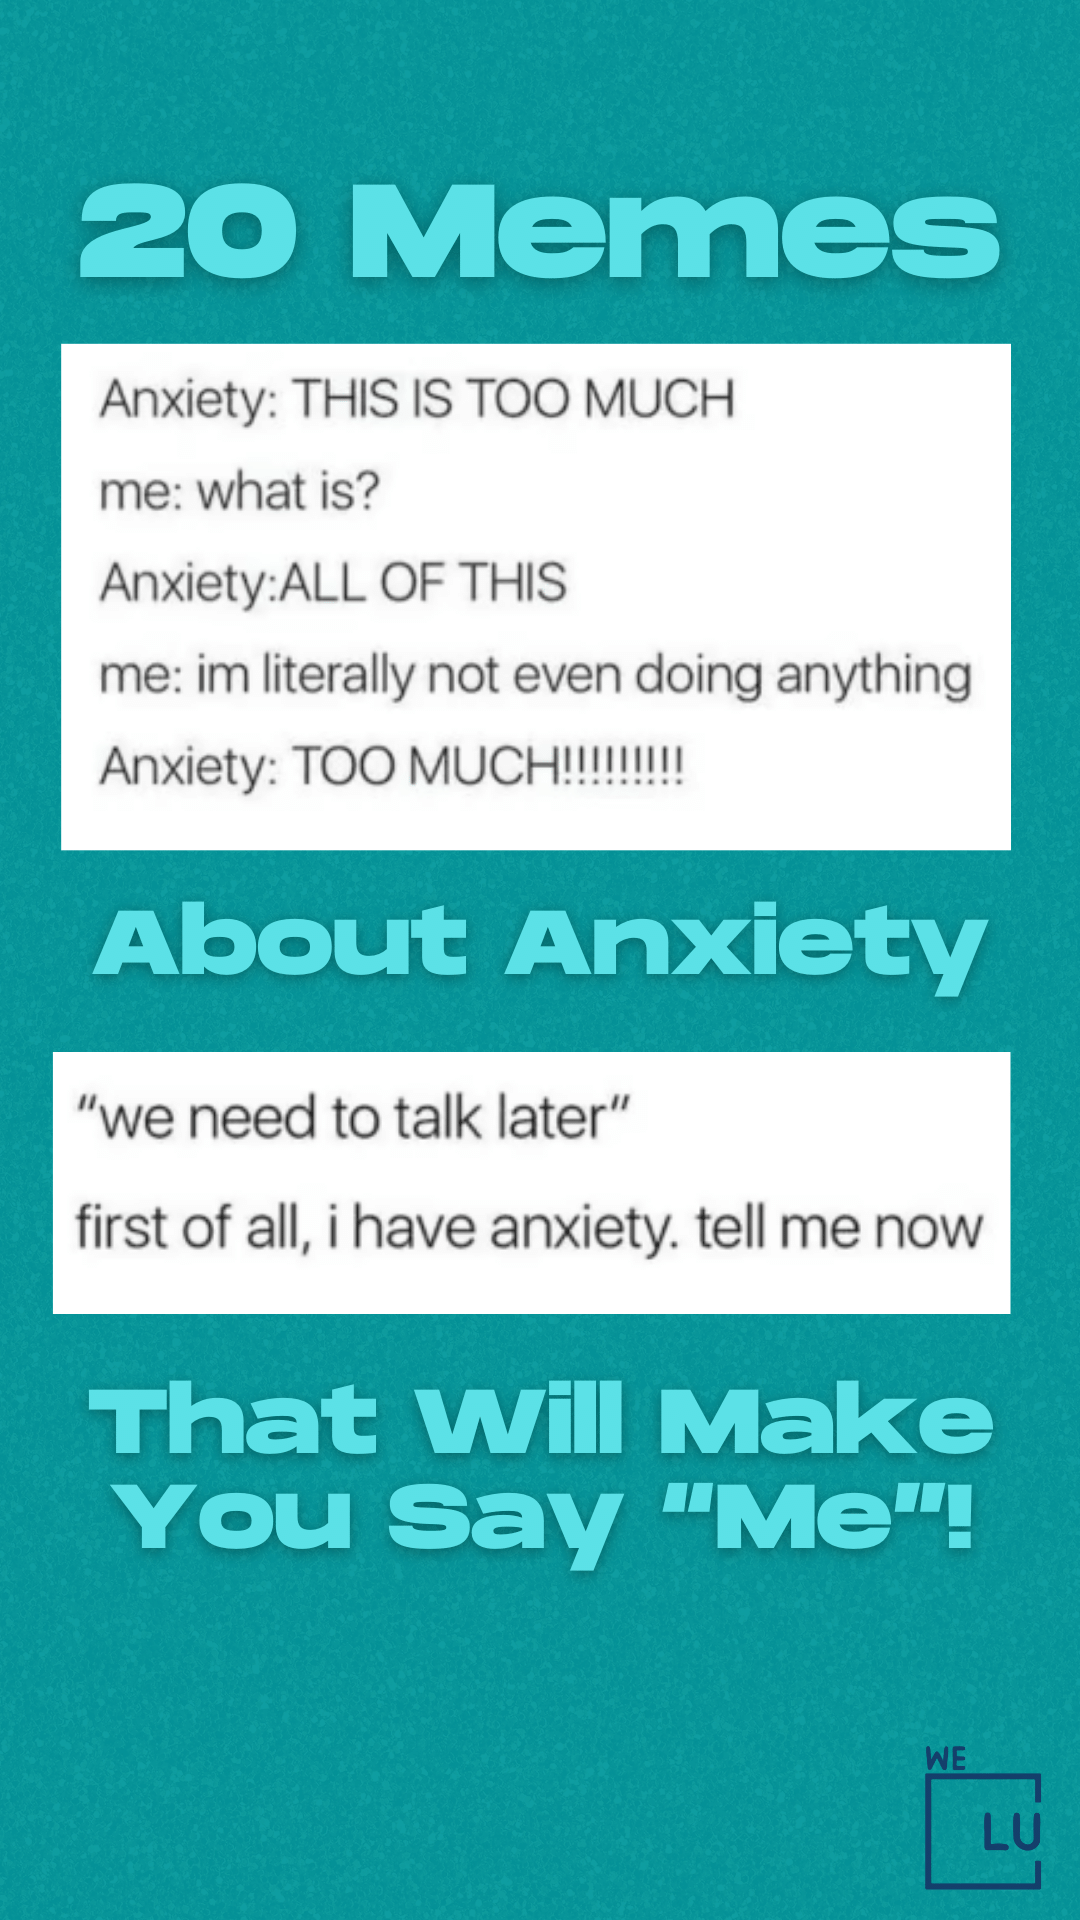 chronic anxiety cat meme